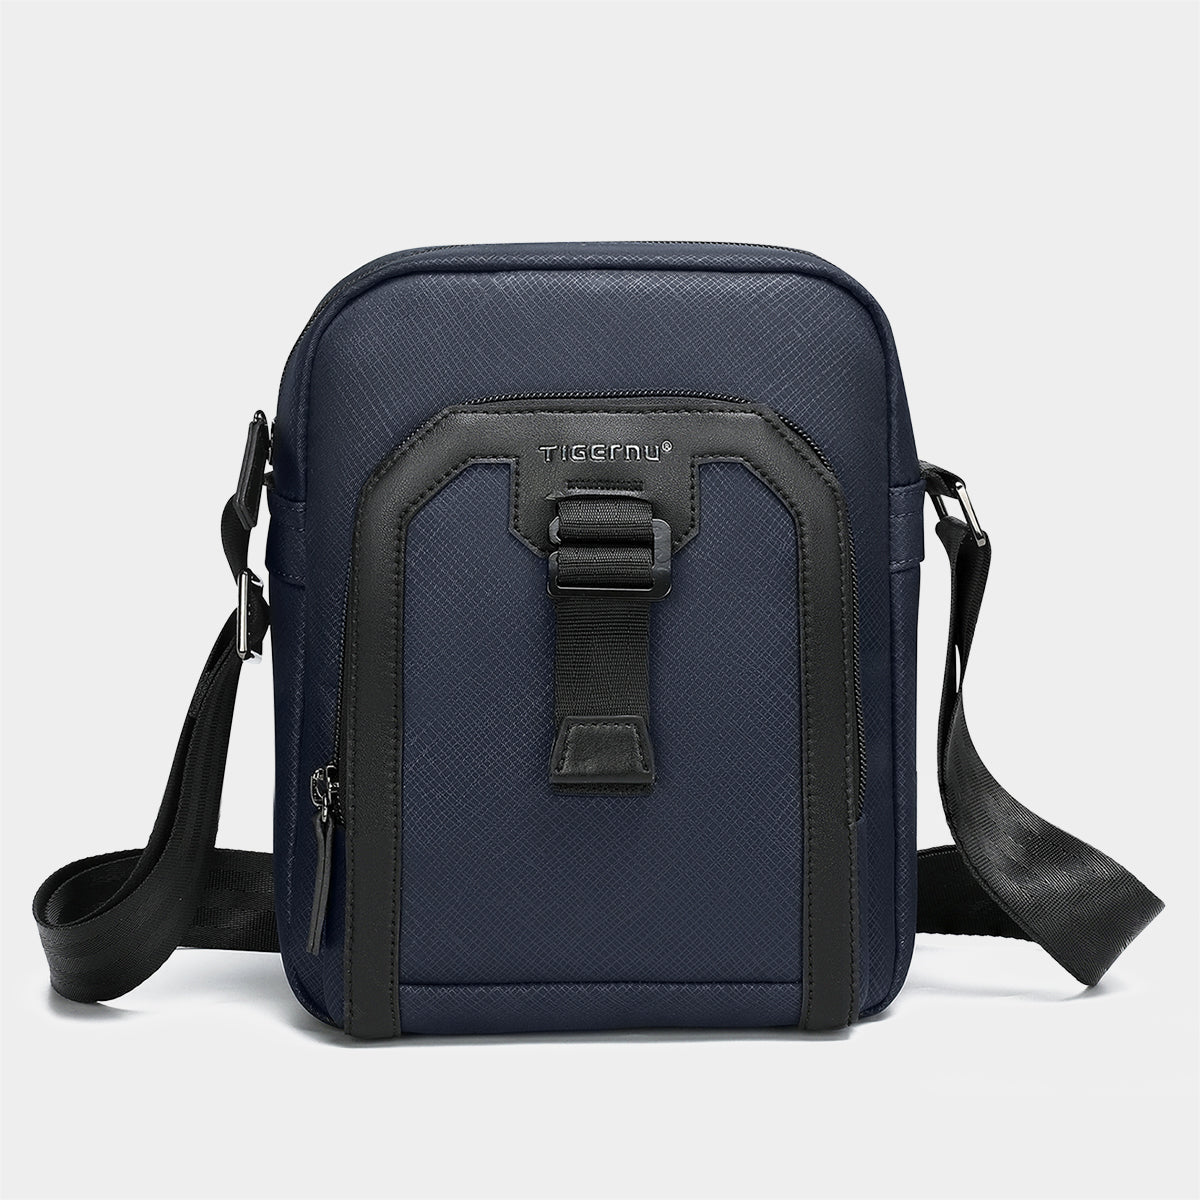 Tigernu Elite Series Classic Men Messenger Bag for Mini iPad 7.9inch